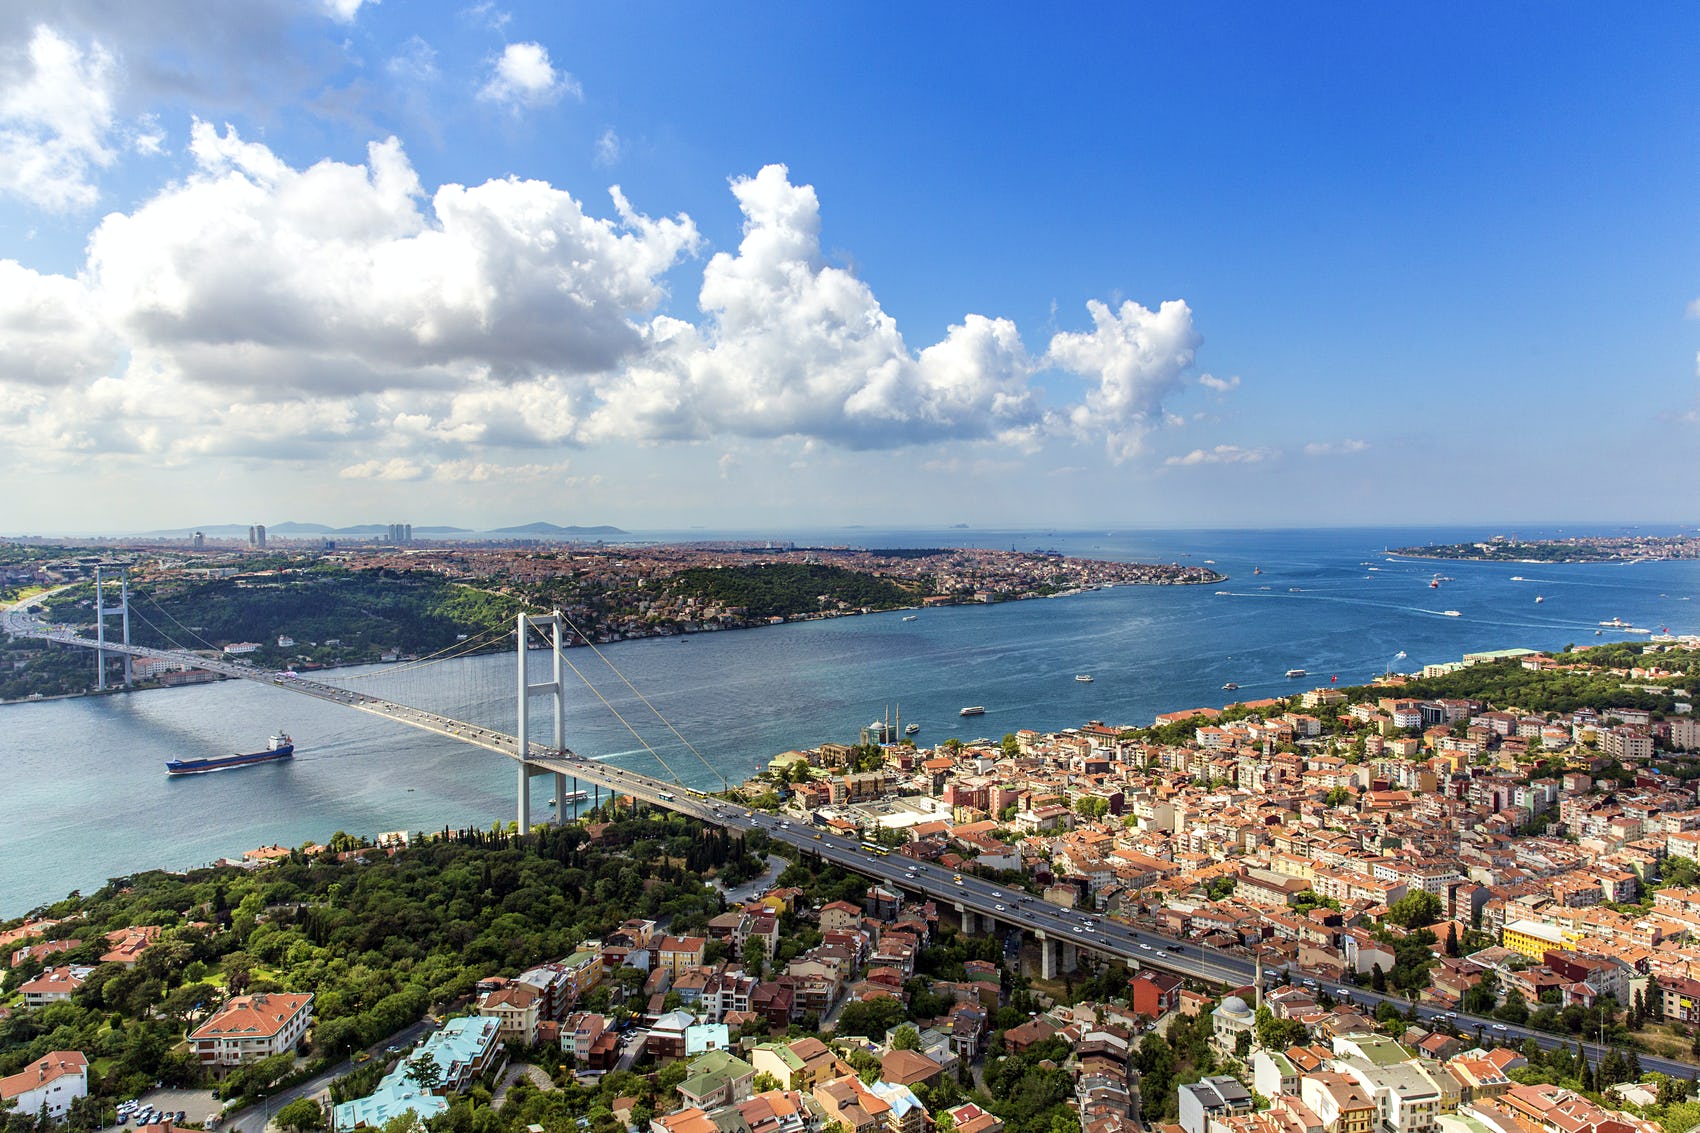 How to move around Istanbul, despite traffic jams